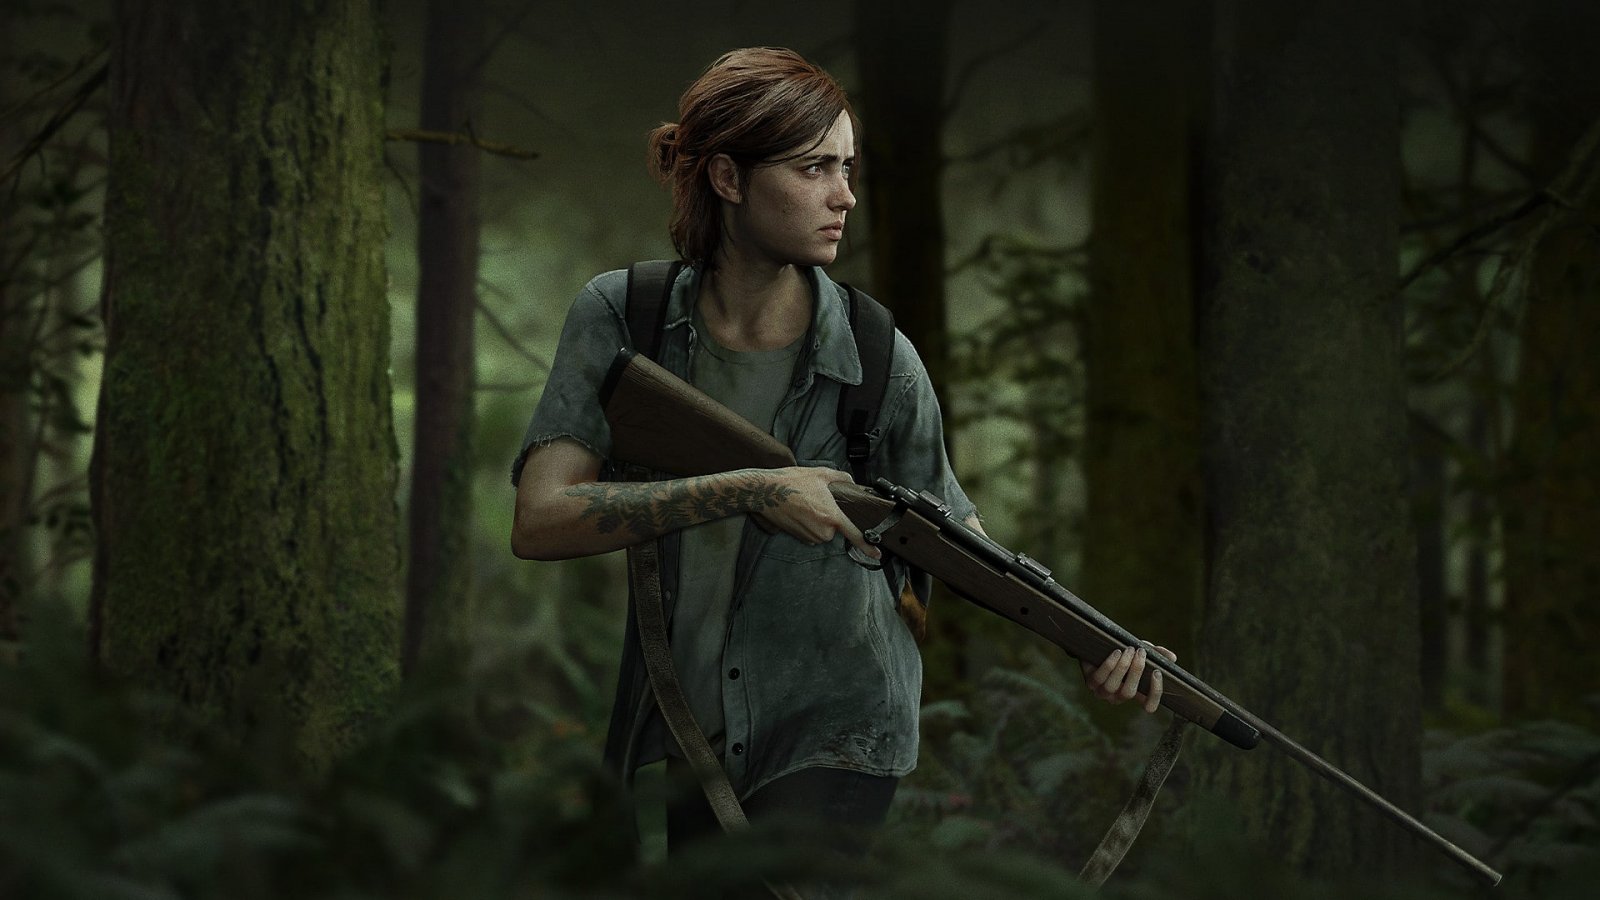 Featured Post Image - За утечкой всего сценария The Last of Us Part 2 стоял 20-летний фанат, желающий скорейшего выхода игры